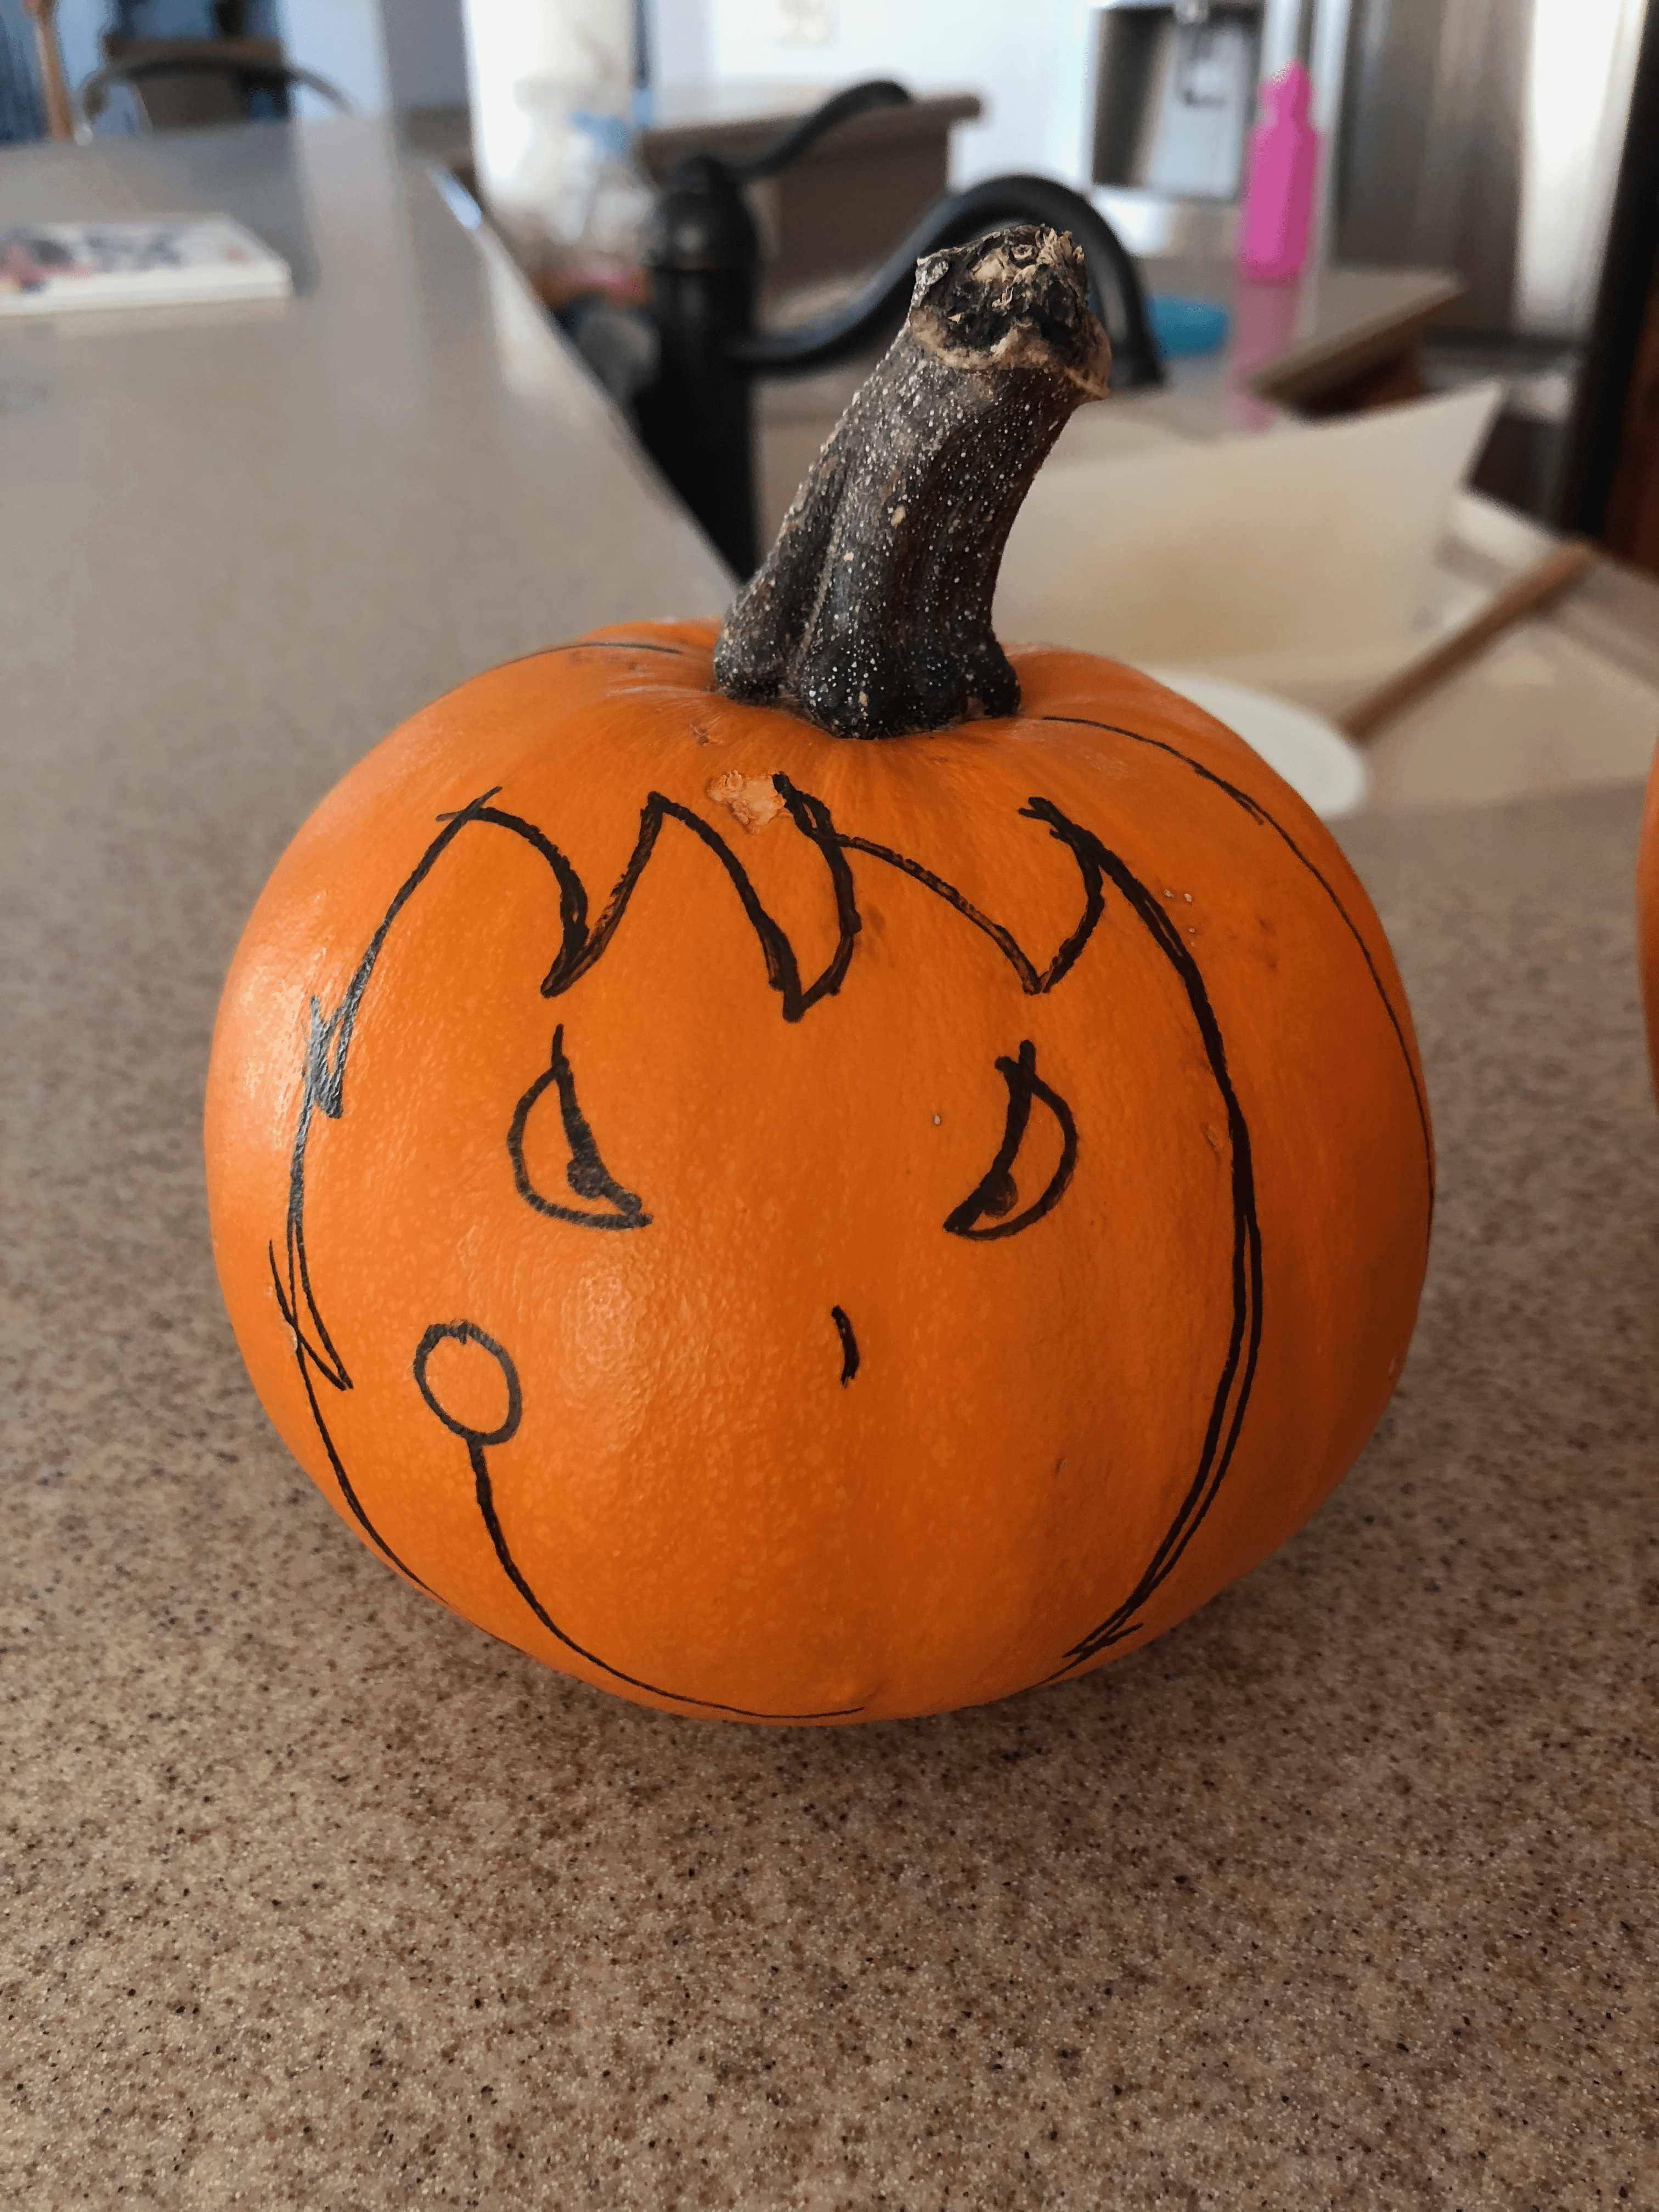 sharpie drawing on pumpkin before painting pumpkin